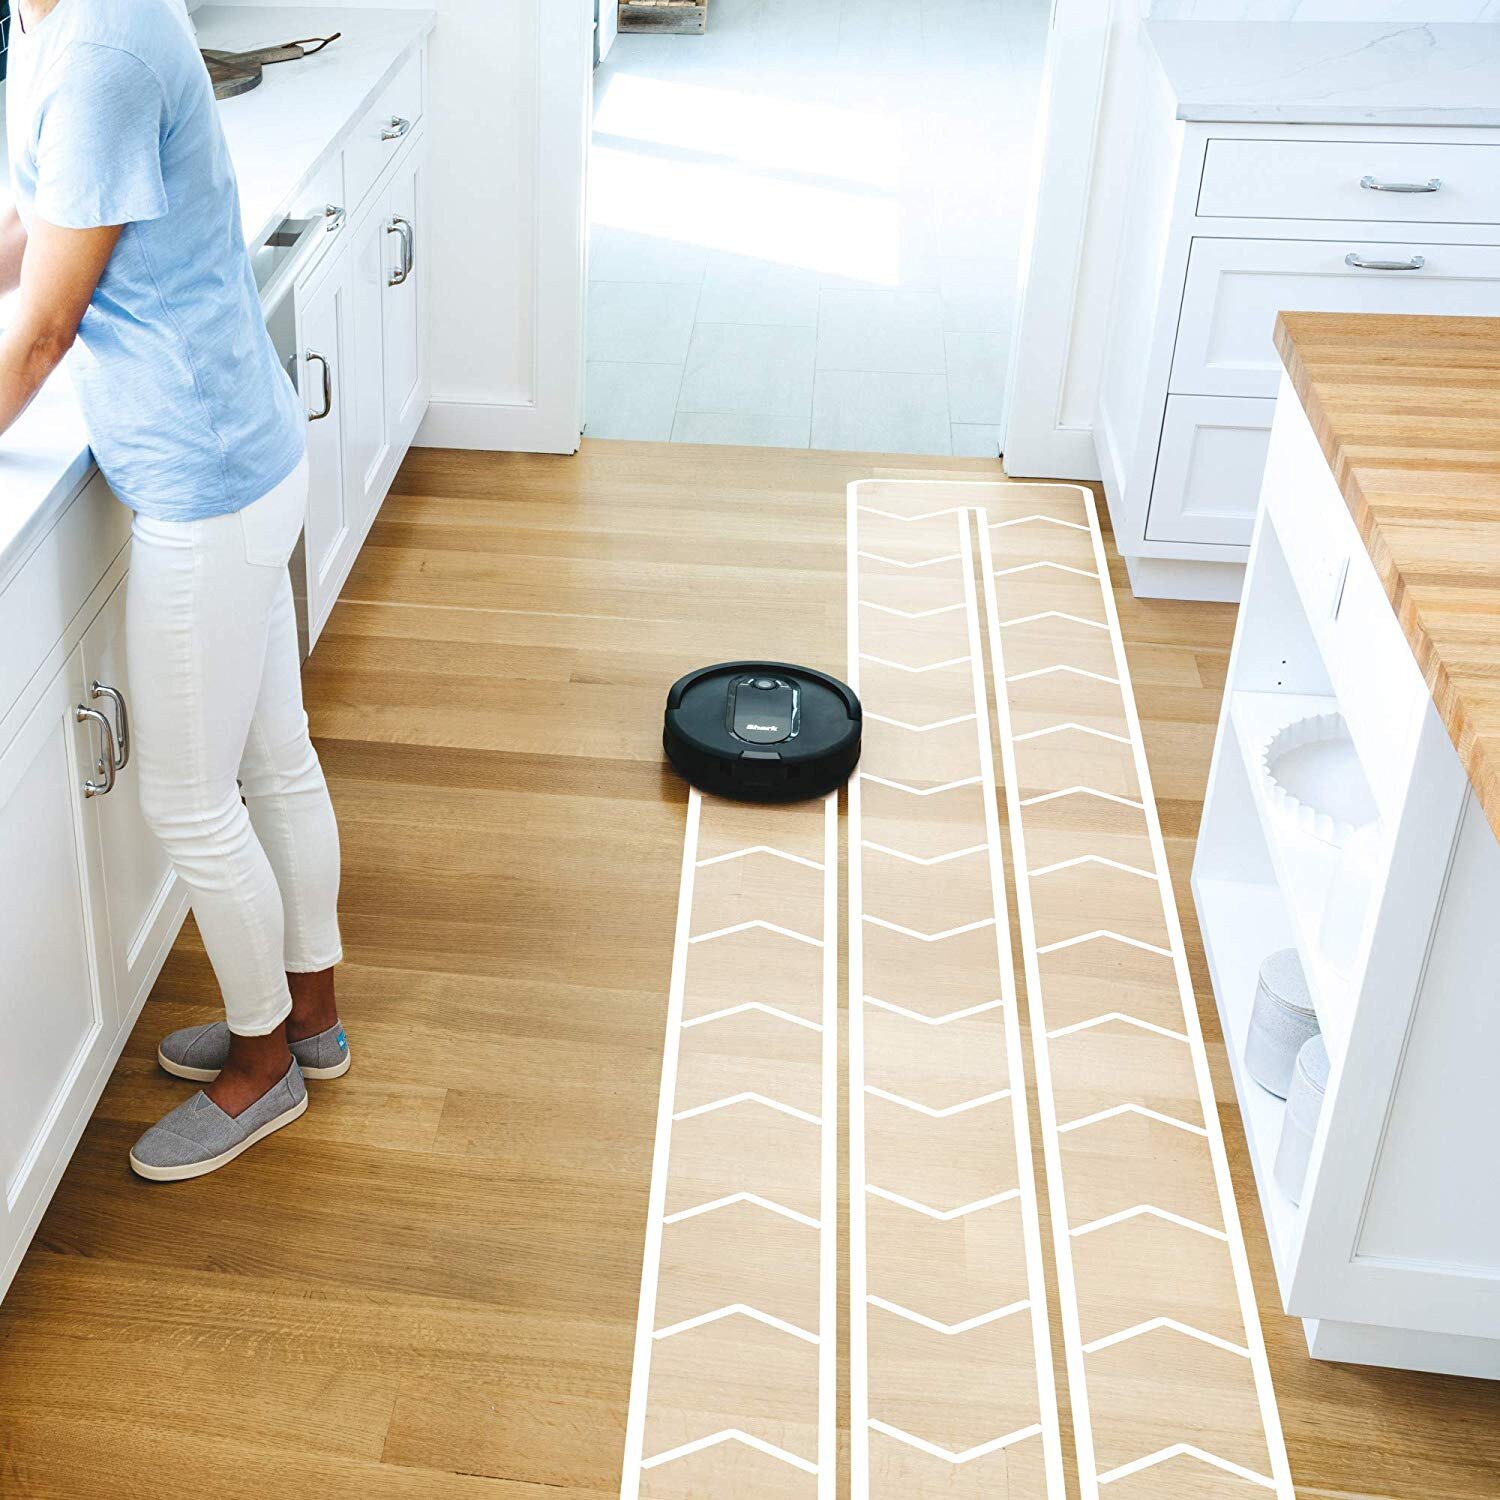 Best Robot Vacuums For Laminate Floors, Robot Mop For Laminate Floors